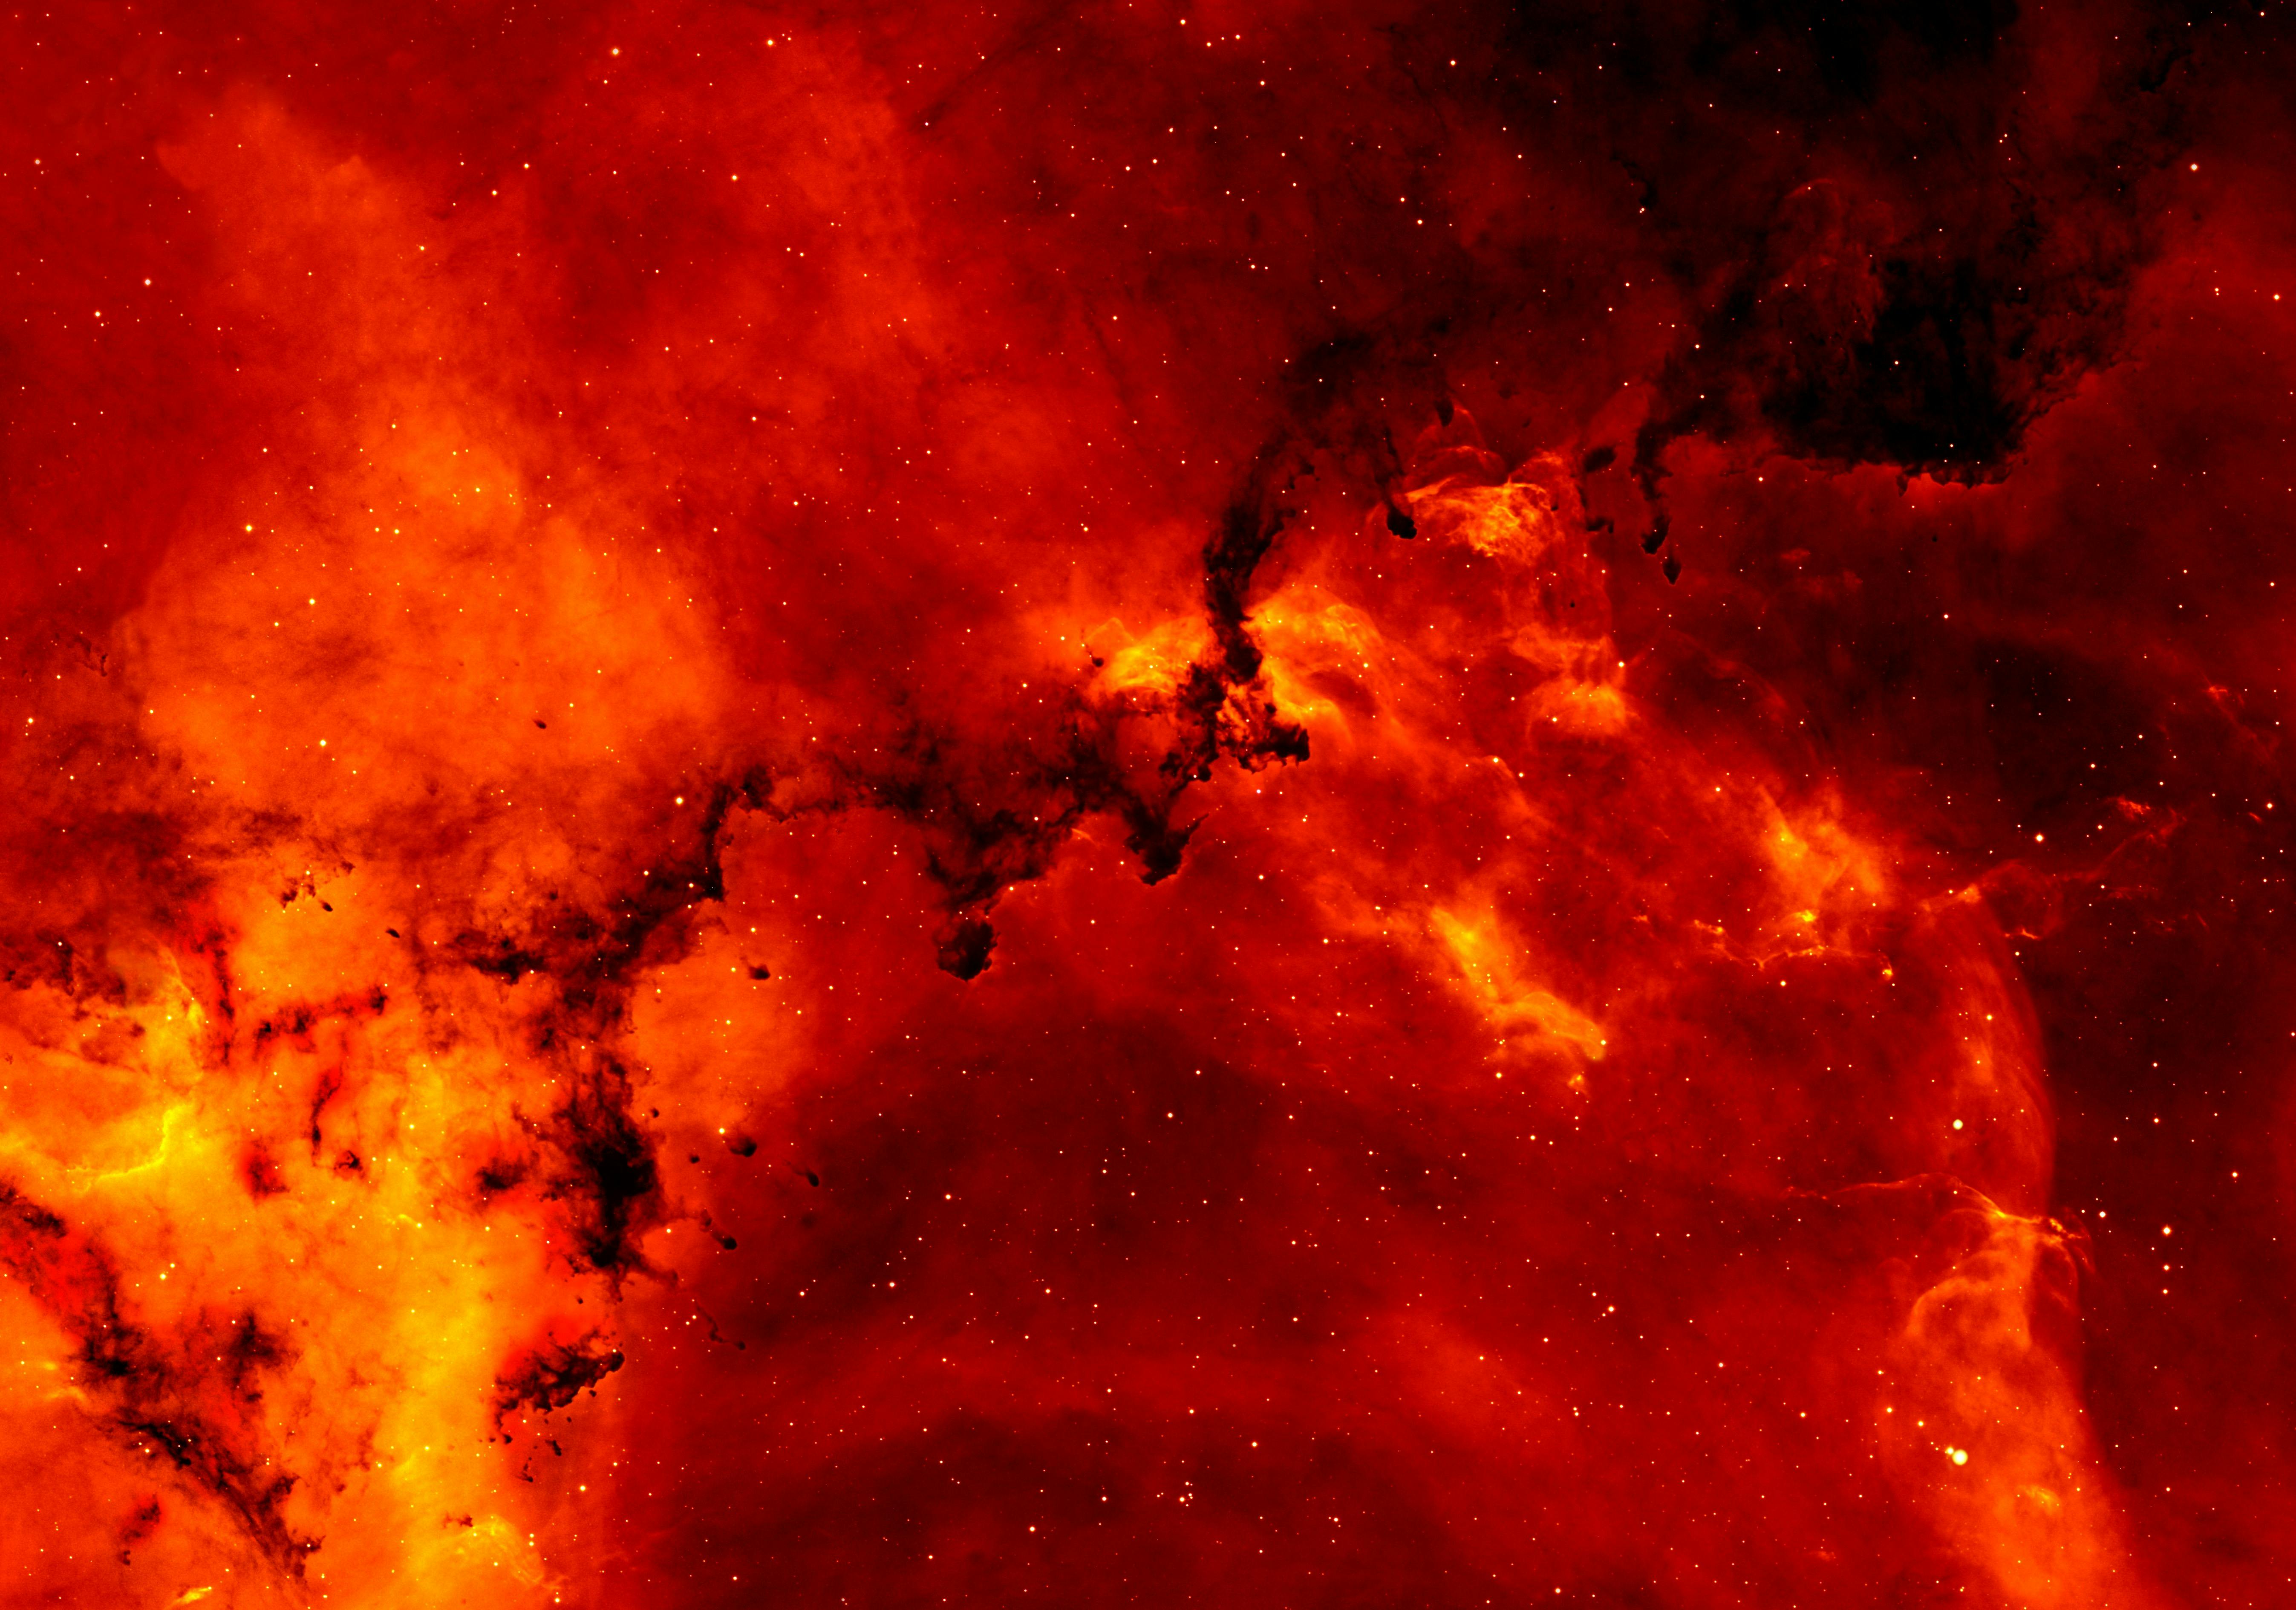 star-clusters-rosette-nebula-star-galaxies-73873.jpeg?cs=srgb&dl=pexels-pixabay-73873.jpg&fm=jpg